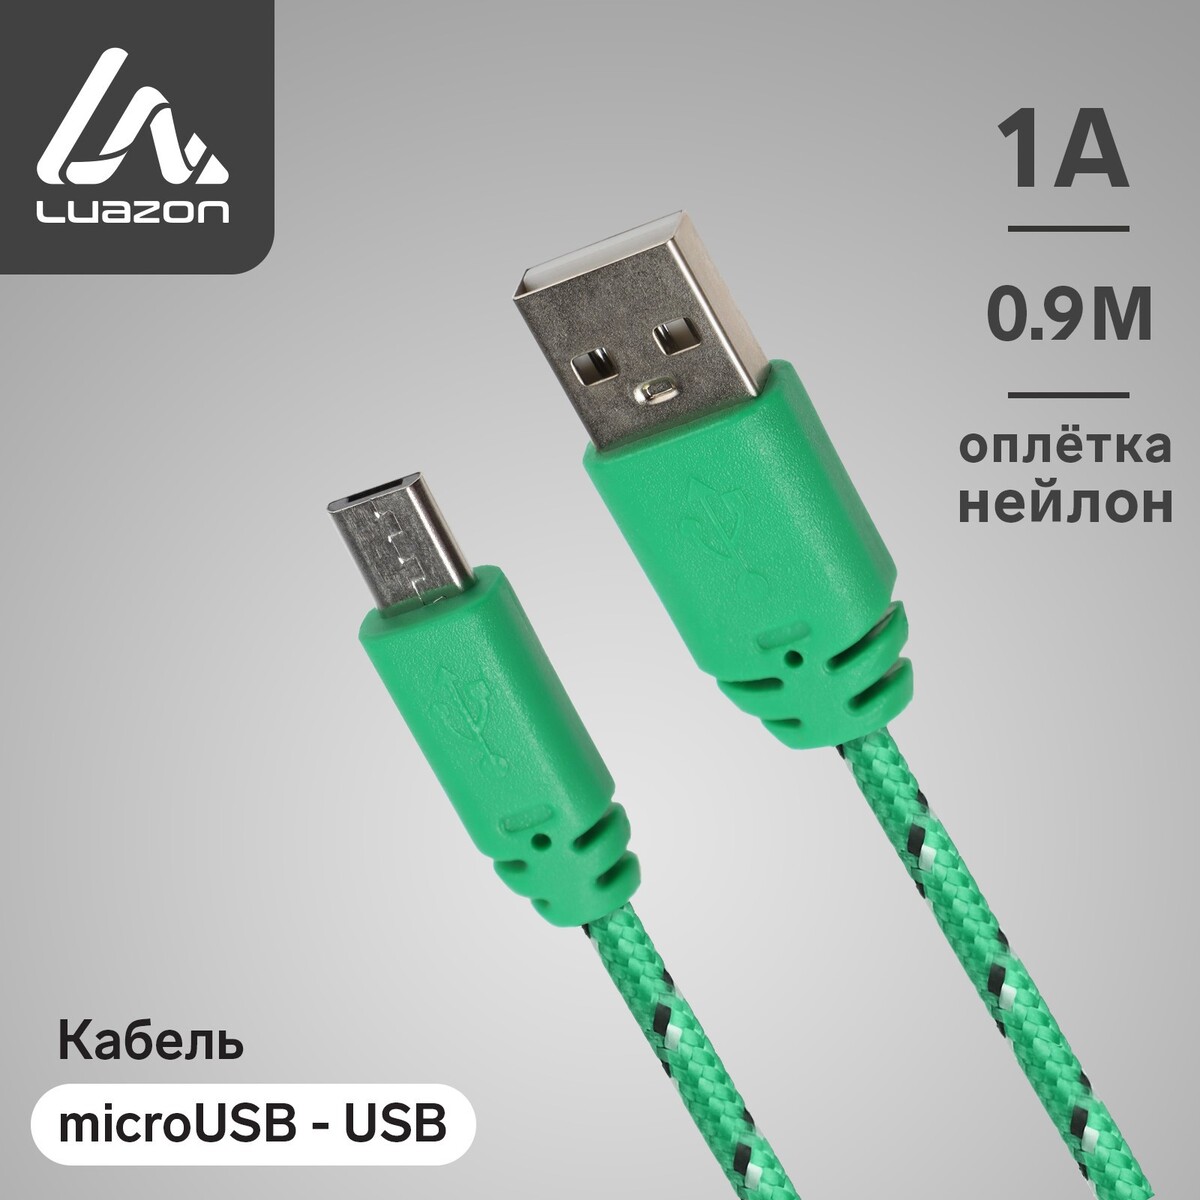 Кабель luazon, microusb - usb, 1 а, 0,9 м, оплетка нейлон, зеленый кабель 2 а microusb usb прозрачный оплетка нейлон 1 м зеленый